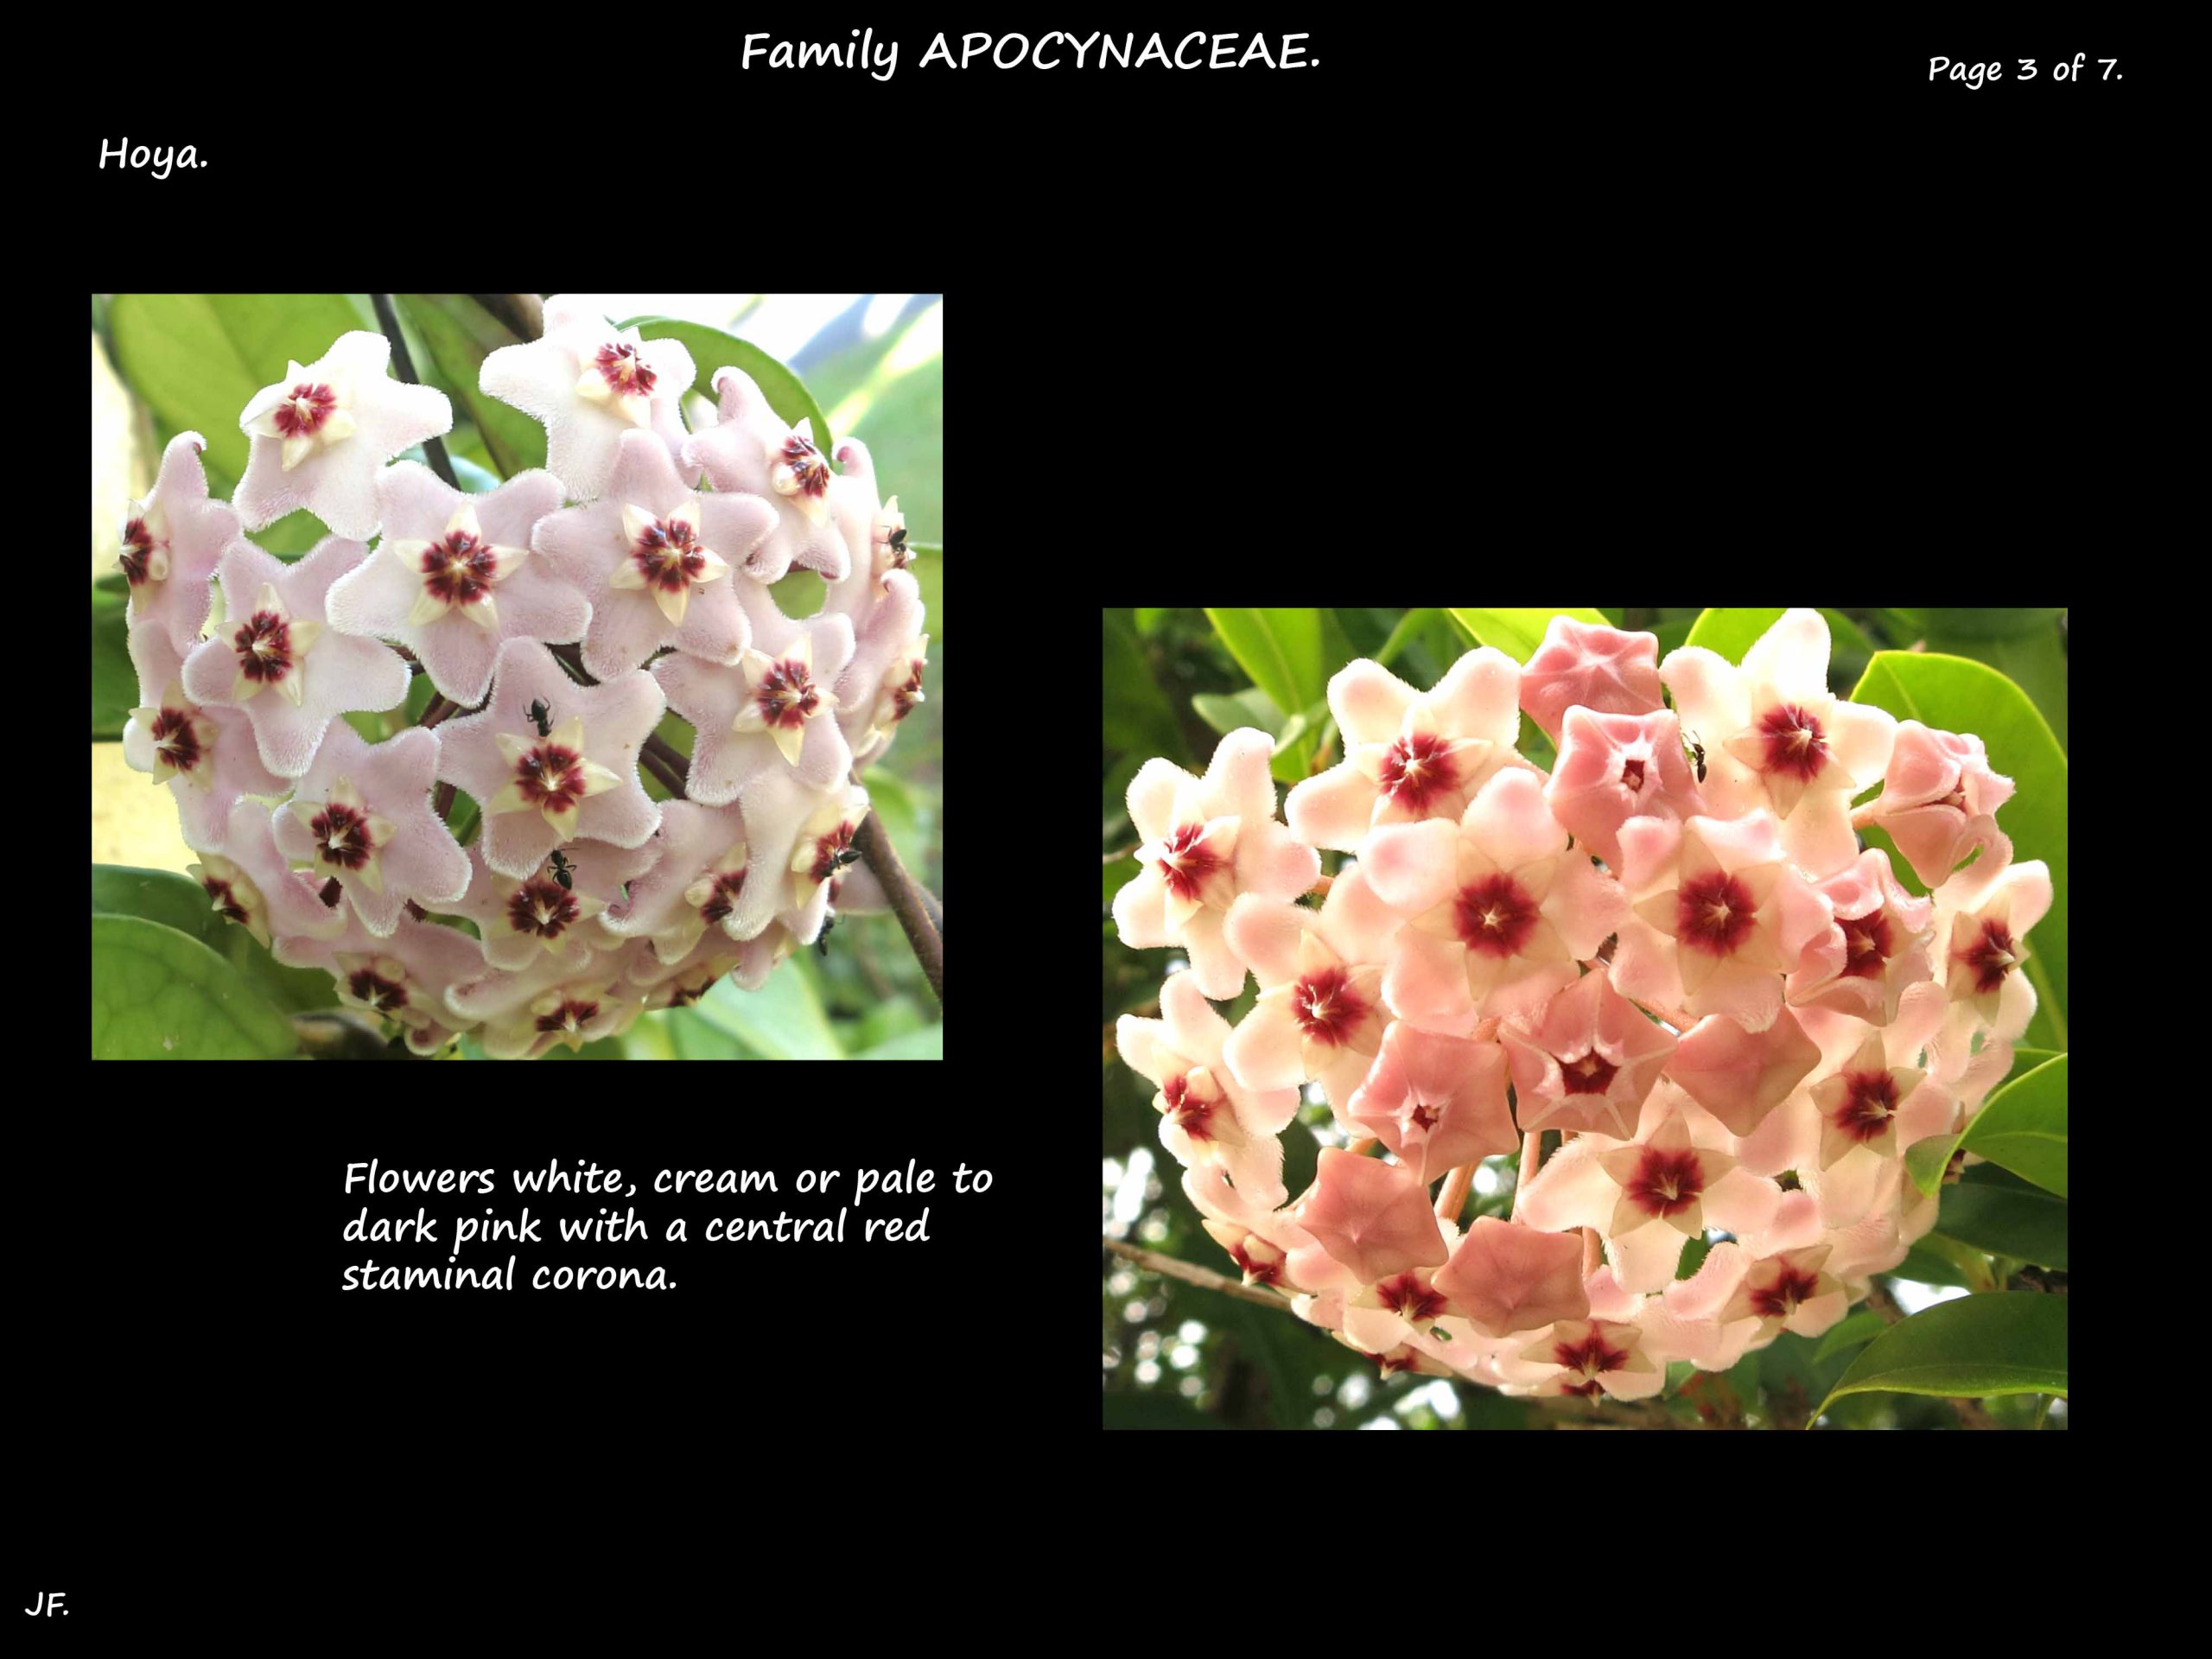 3 Hoya inflorescence